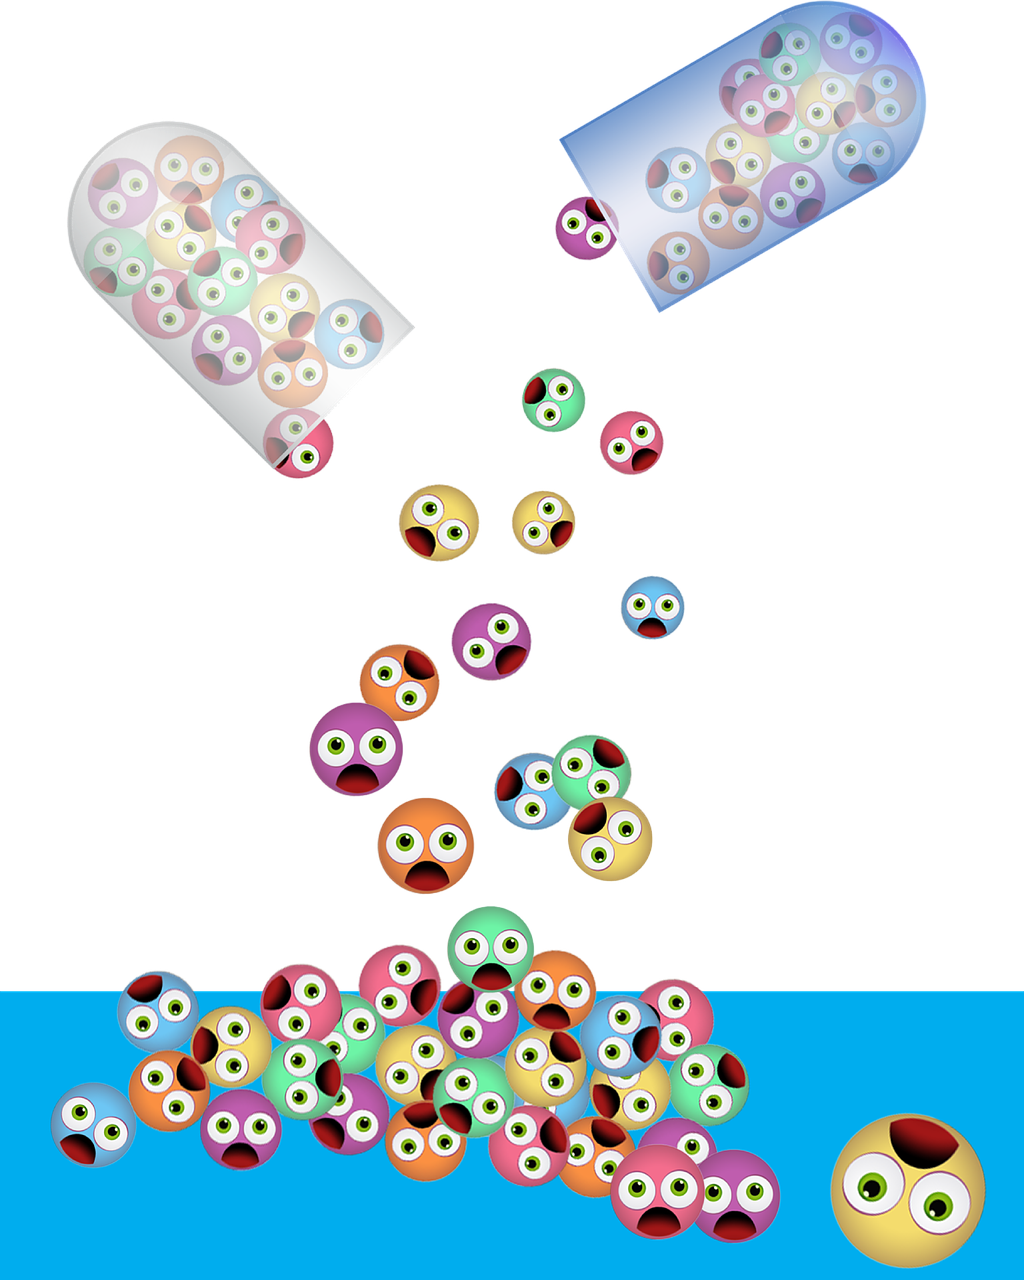  Medizin Hintergrundbild 1024x1280. Grafik Pille Emoticon Vektorgrafik auf Pixabay